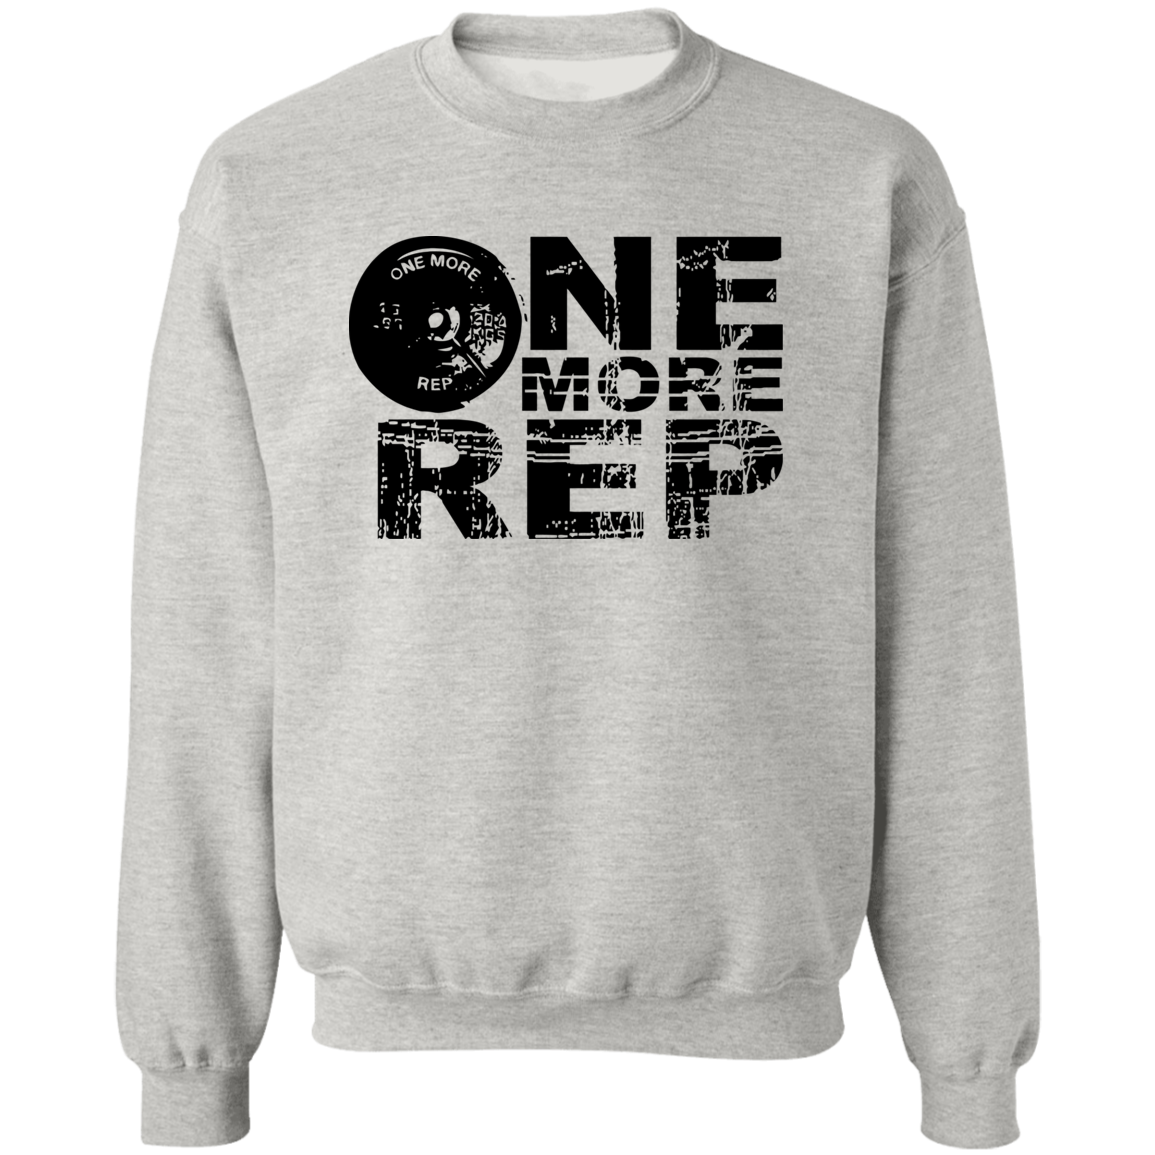 ONE MORE REP  Crewneck Sweatshirt 8 oz (Closeout)